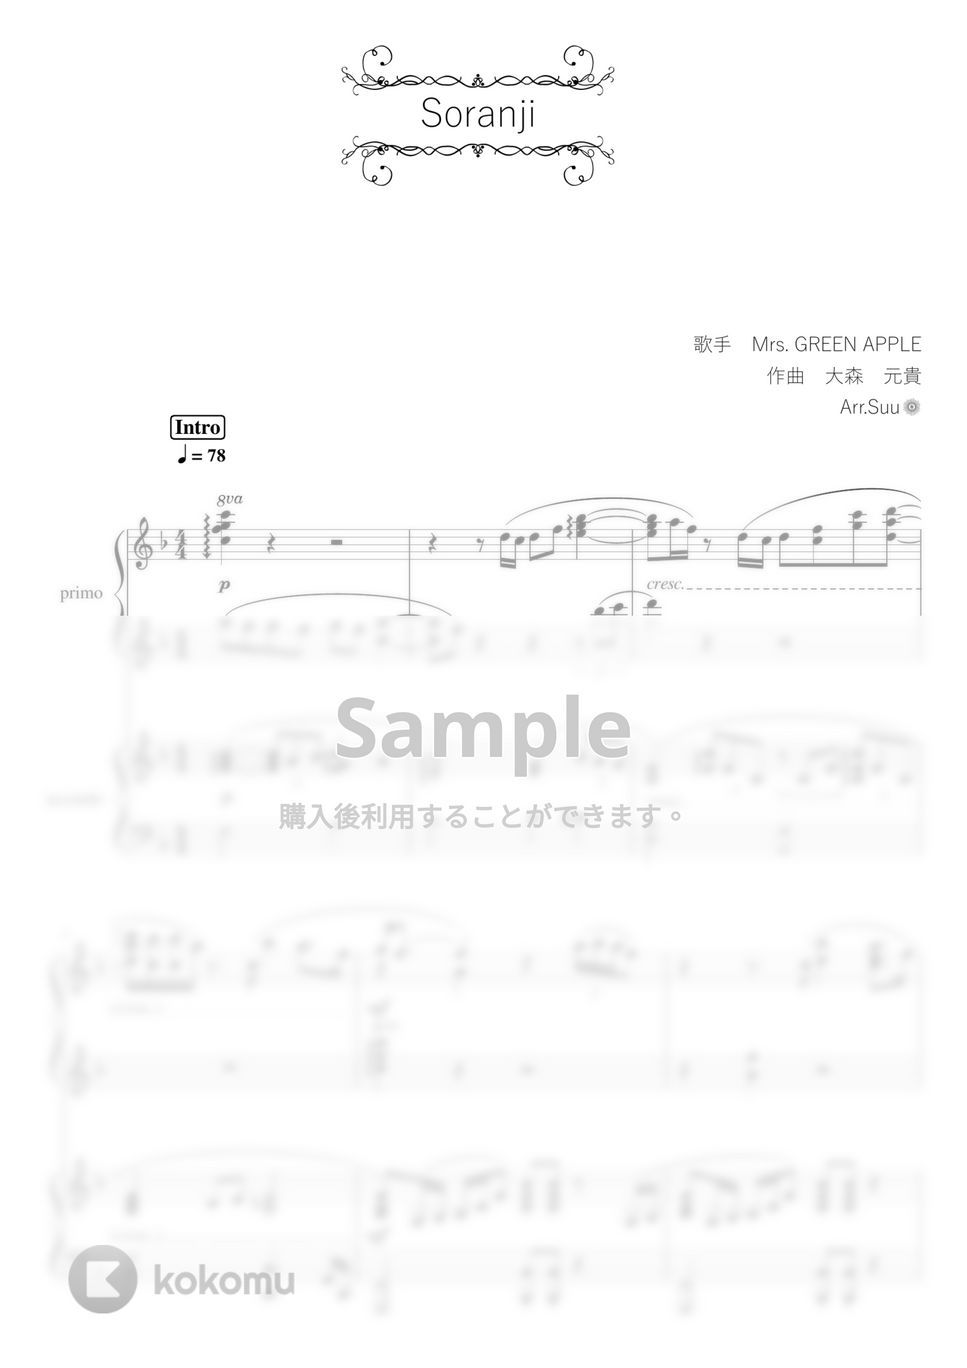 Mrs. GREEN APPLE - Soranji (ピアノ連弾上級  / 映画／ラーゲリより愛を込めて) by Suu